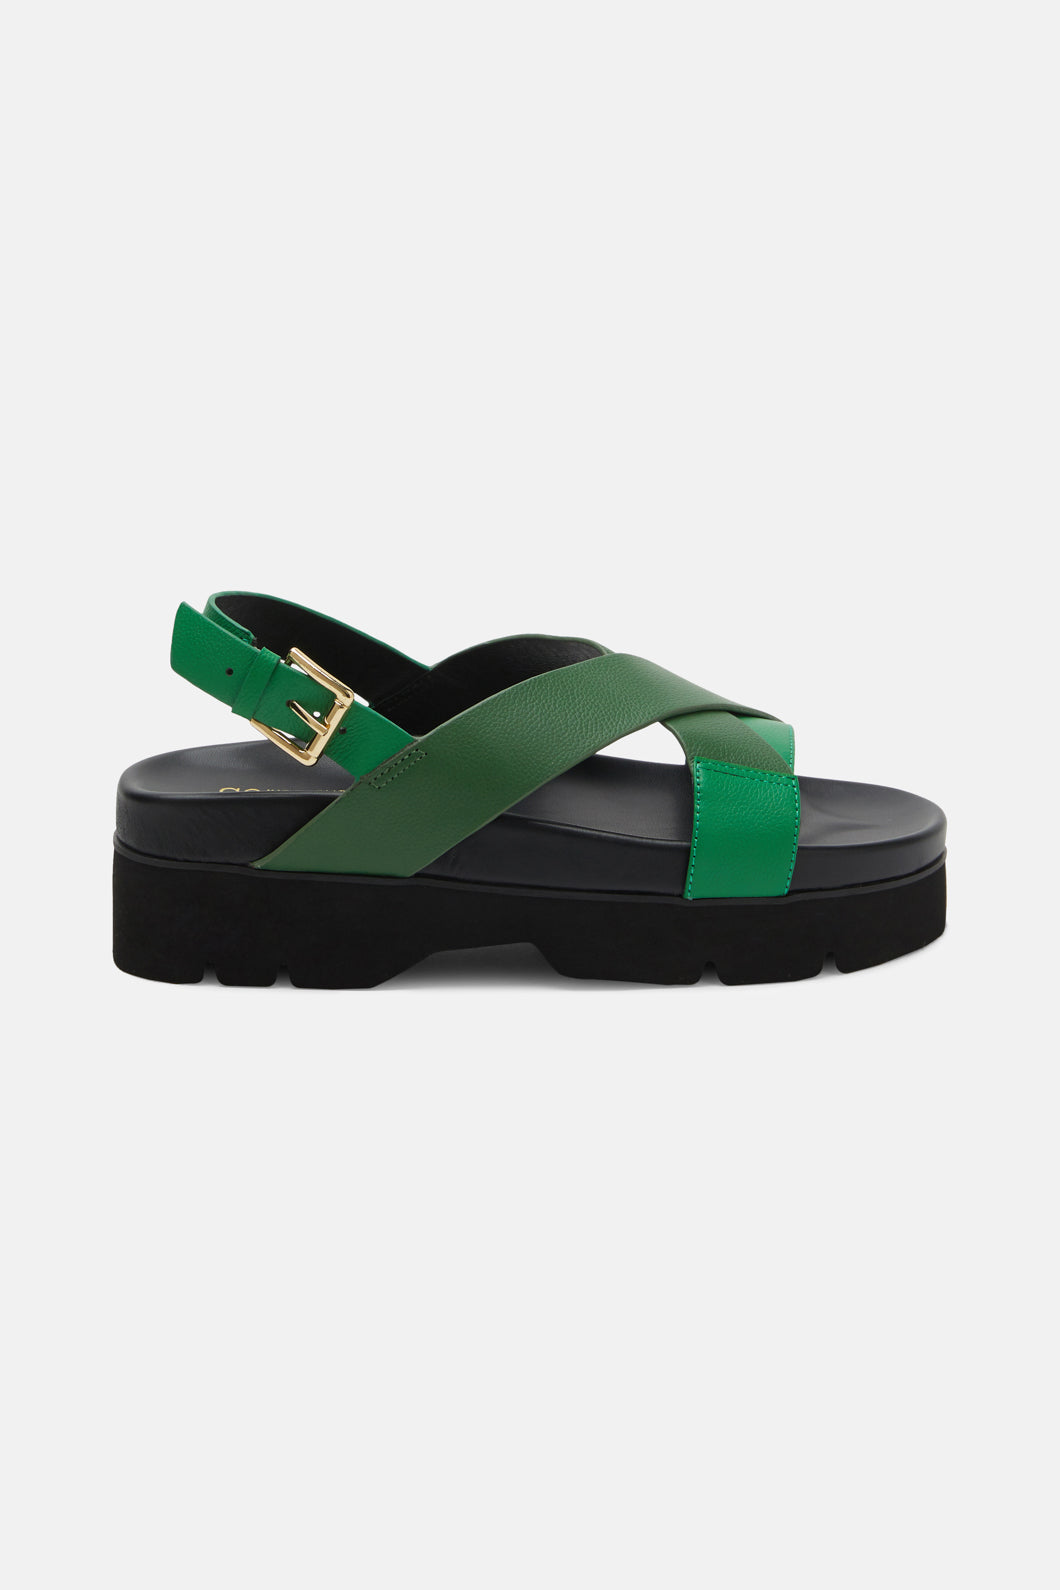 Schutz Cadey-Lee Dress Sandal Verniz Curacao Green Ankle Strap Two Piece  Sandals (6.5) - Walmart.com